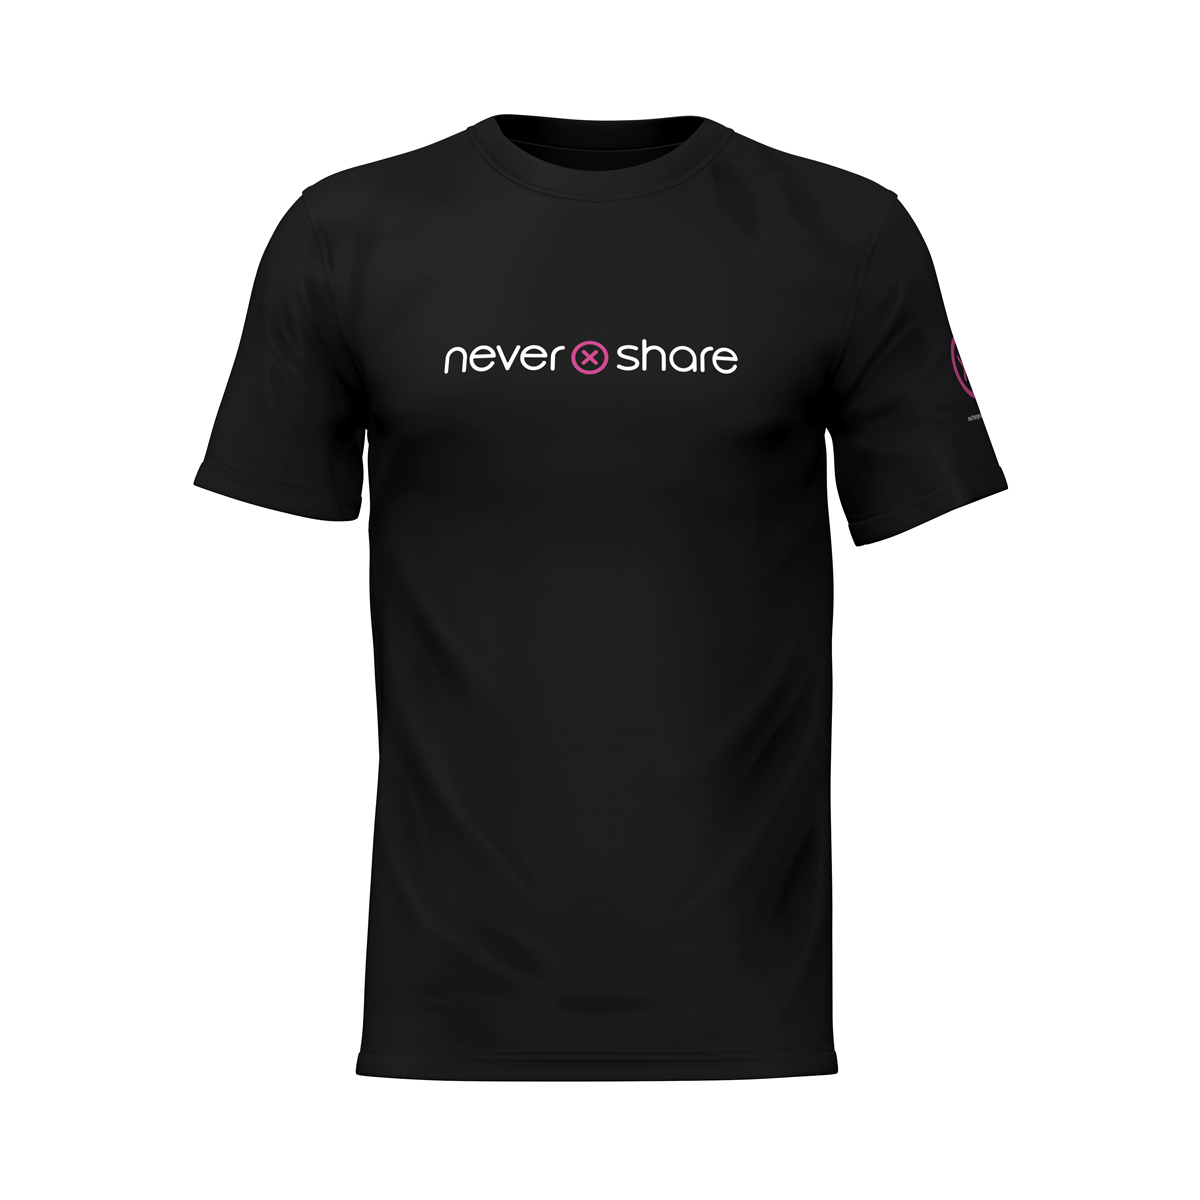 Nevershare T-shirt (large)